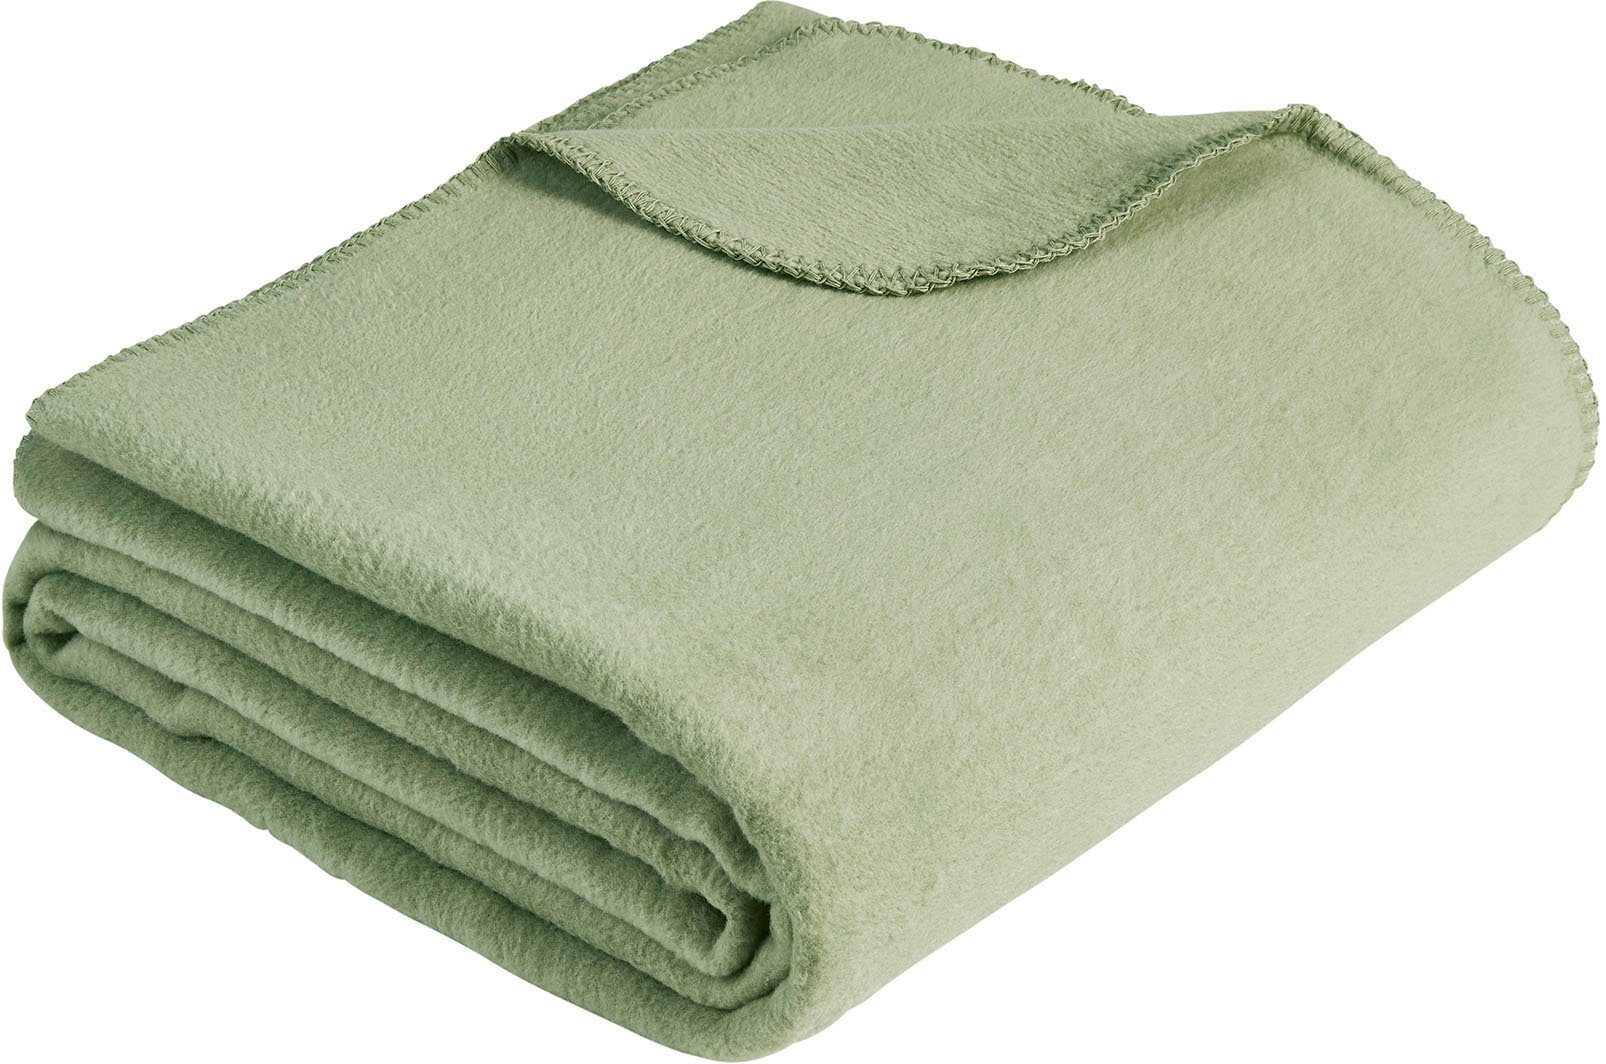 Wohndecke Uni Decke Malaga, IBENA, unifarben grün